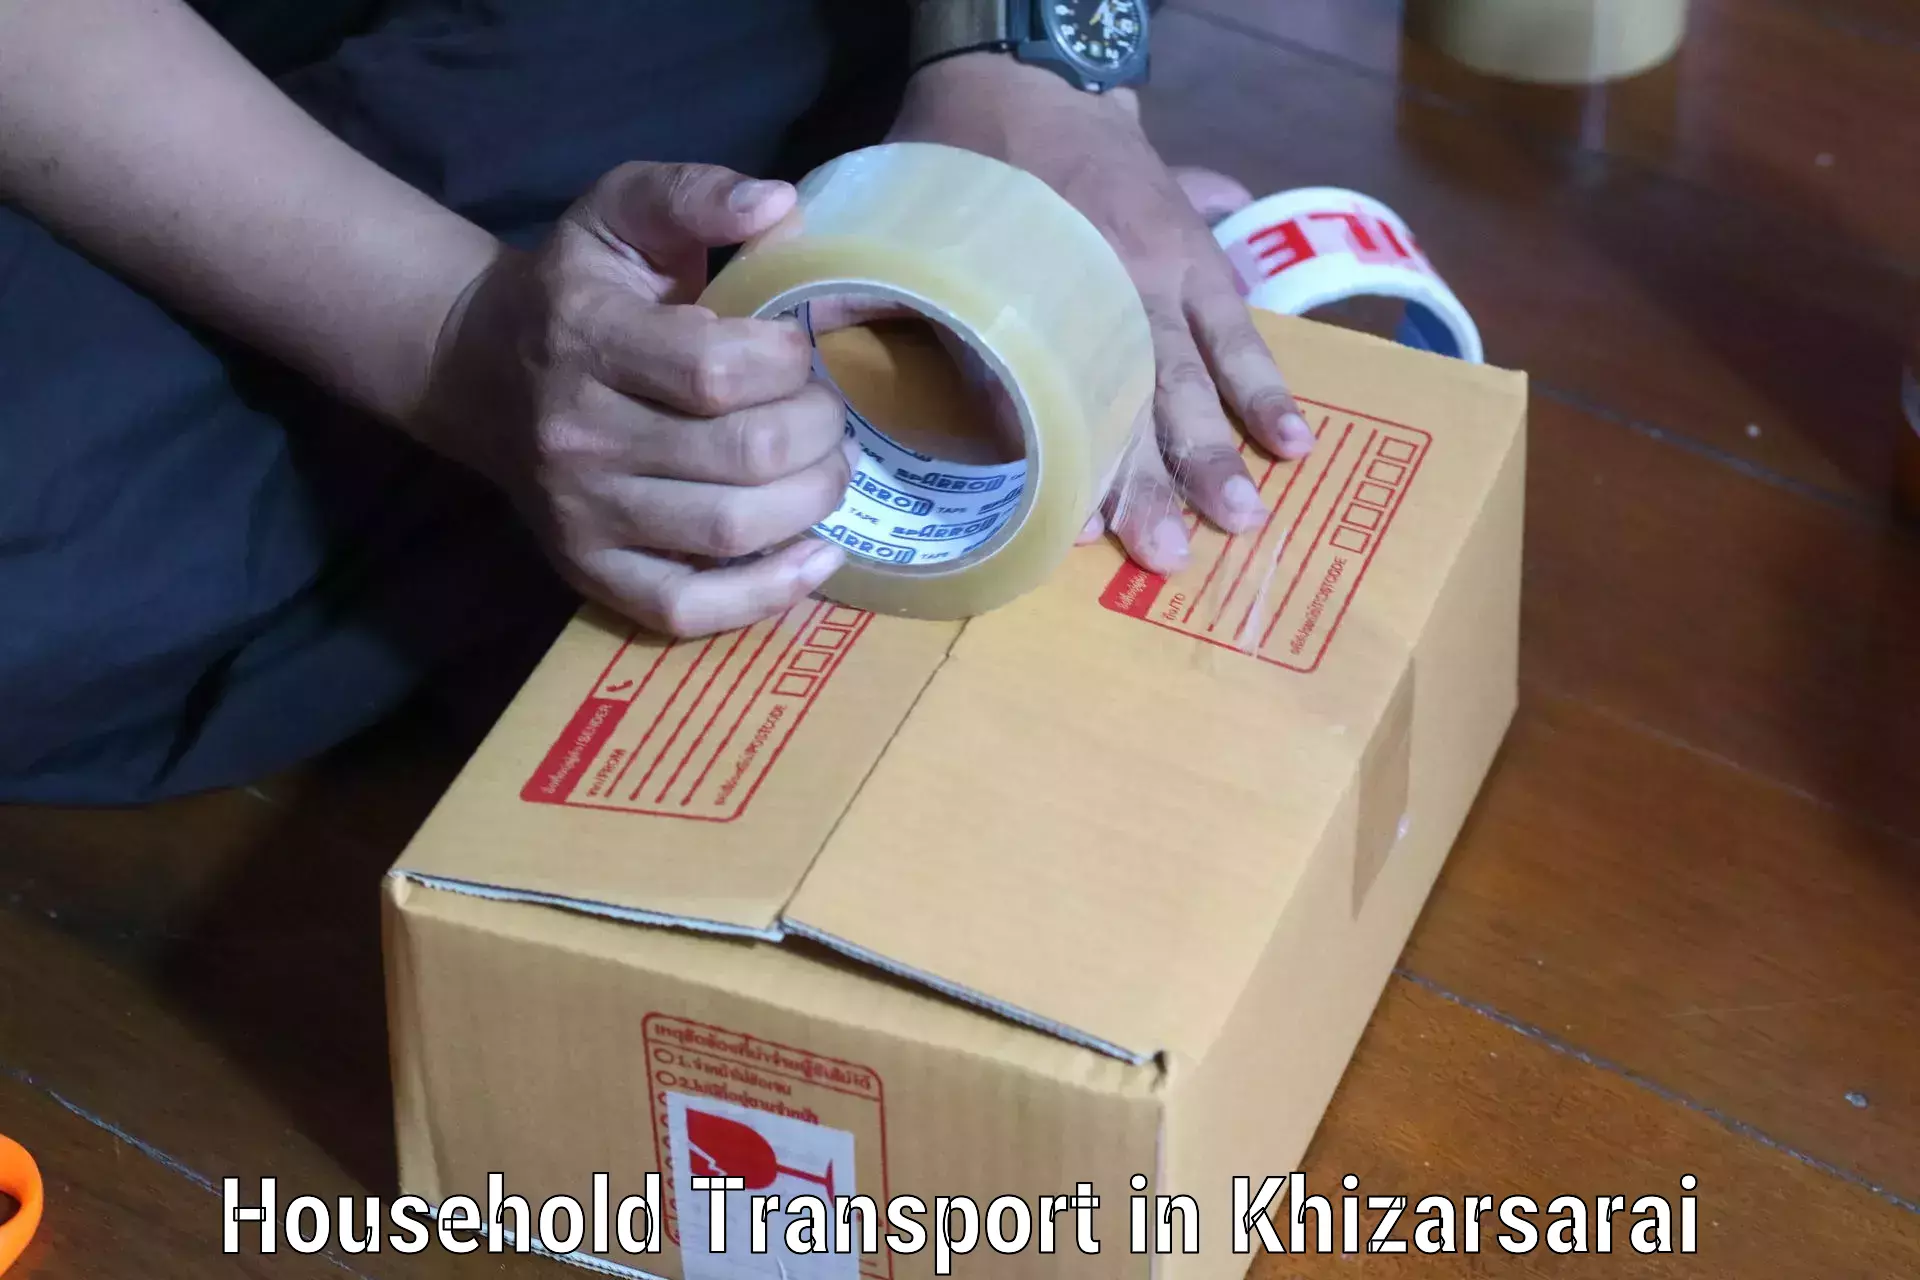 Professional home goods transport in Khizarsarai